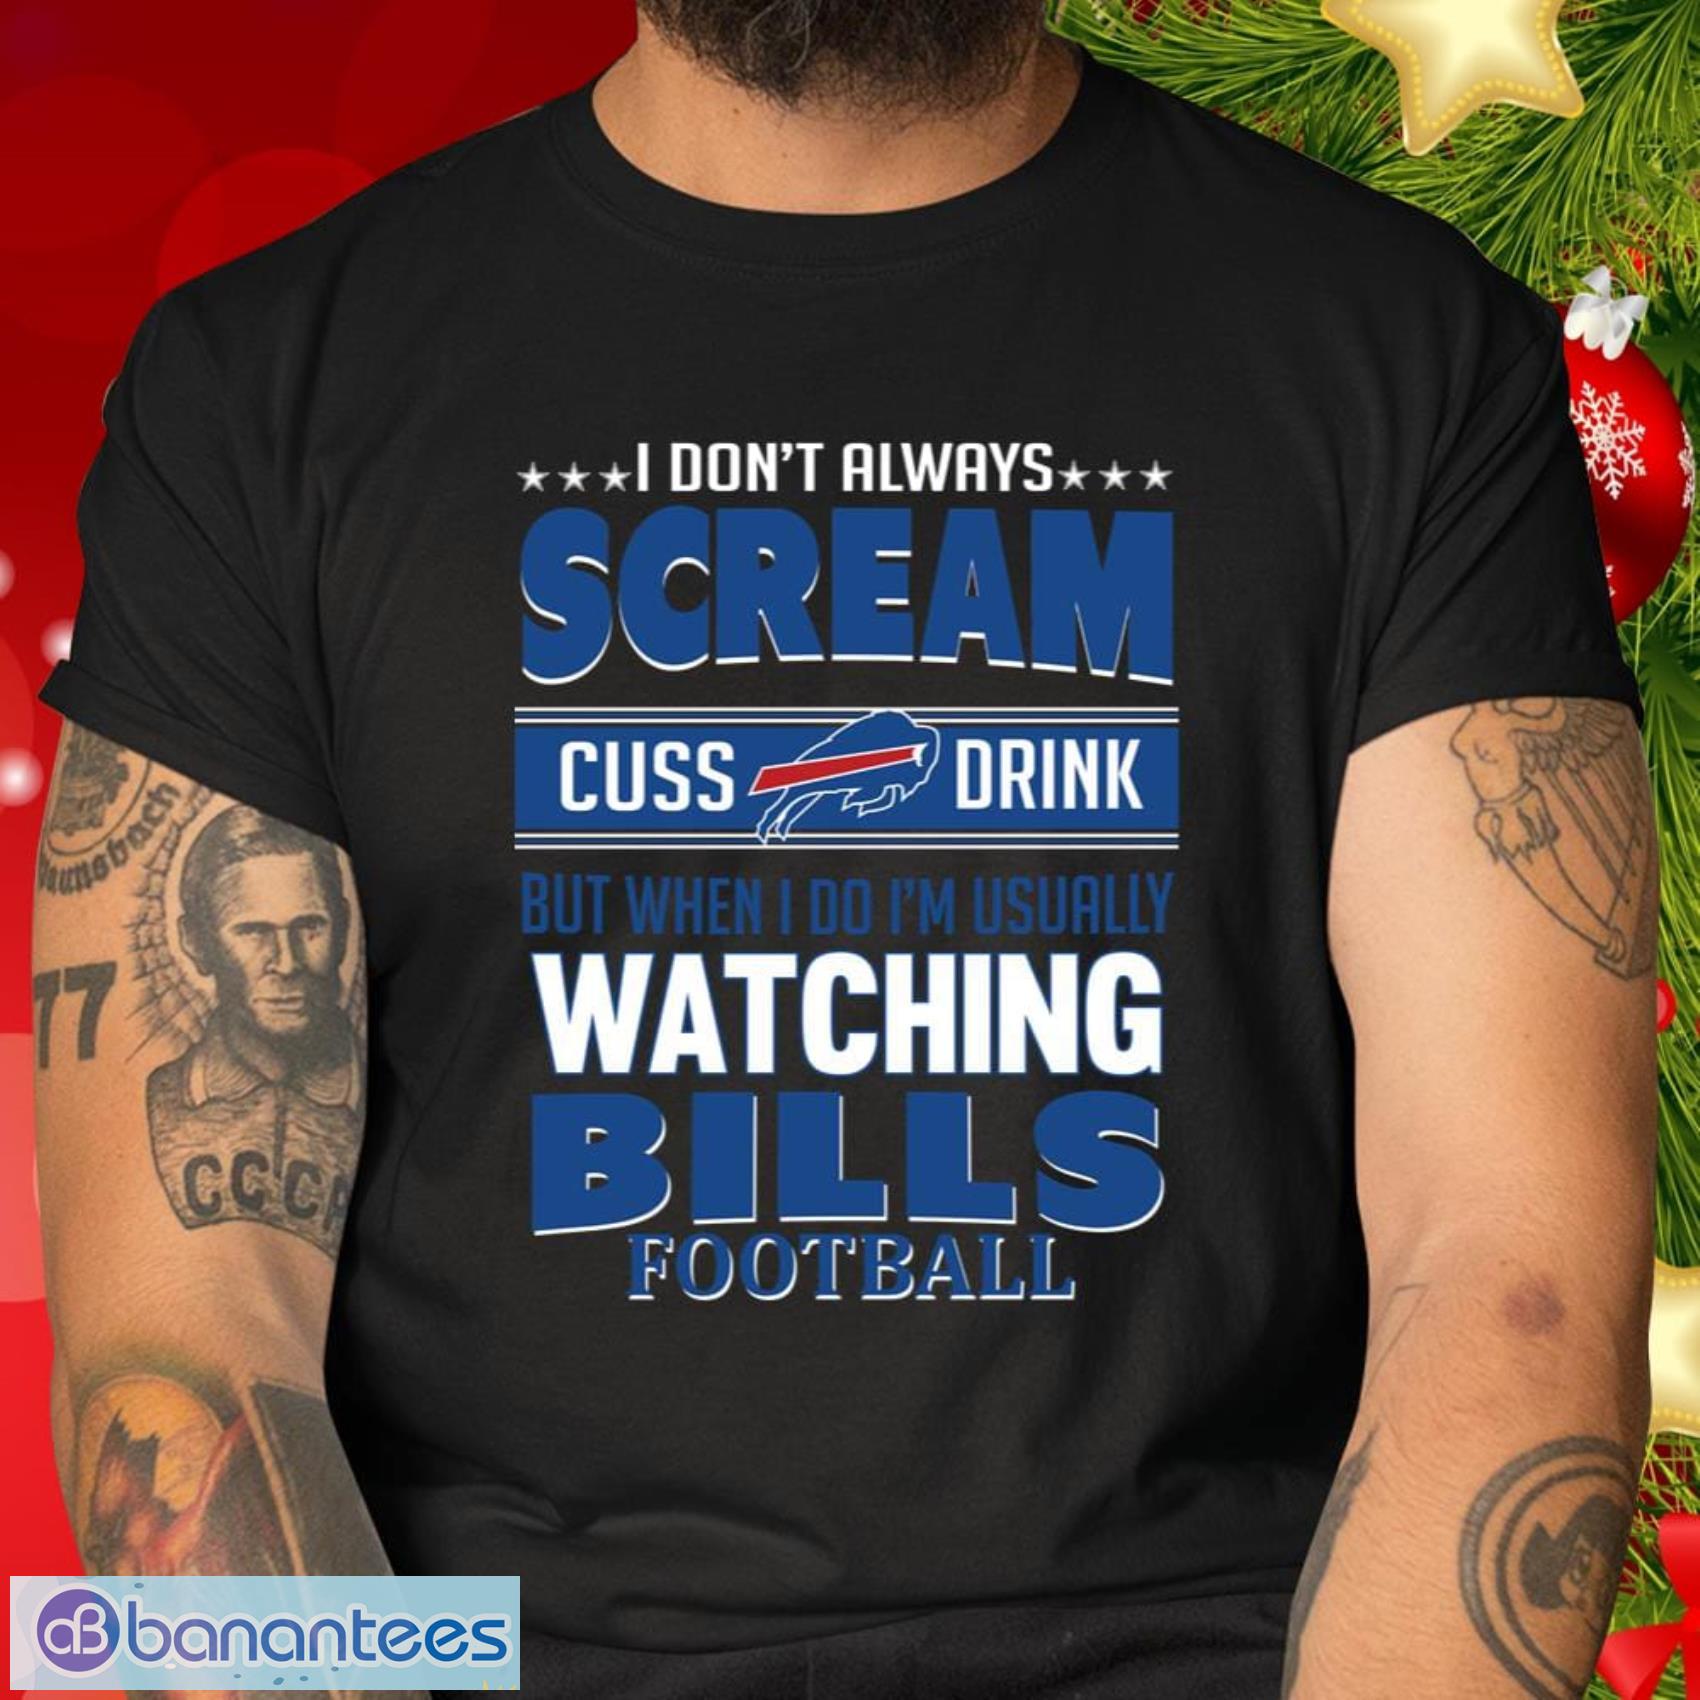 Buffalo Bills NFL Football Gift Fr Fans I Scream Cuss Drink When I’m Watching My Team T Shirt - Buffalo Bills NFL Football I Scream Cuss Drink When I’m Watching My Team T Shirt_2